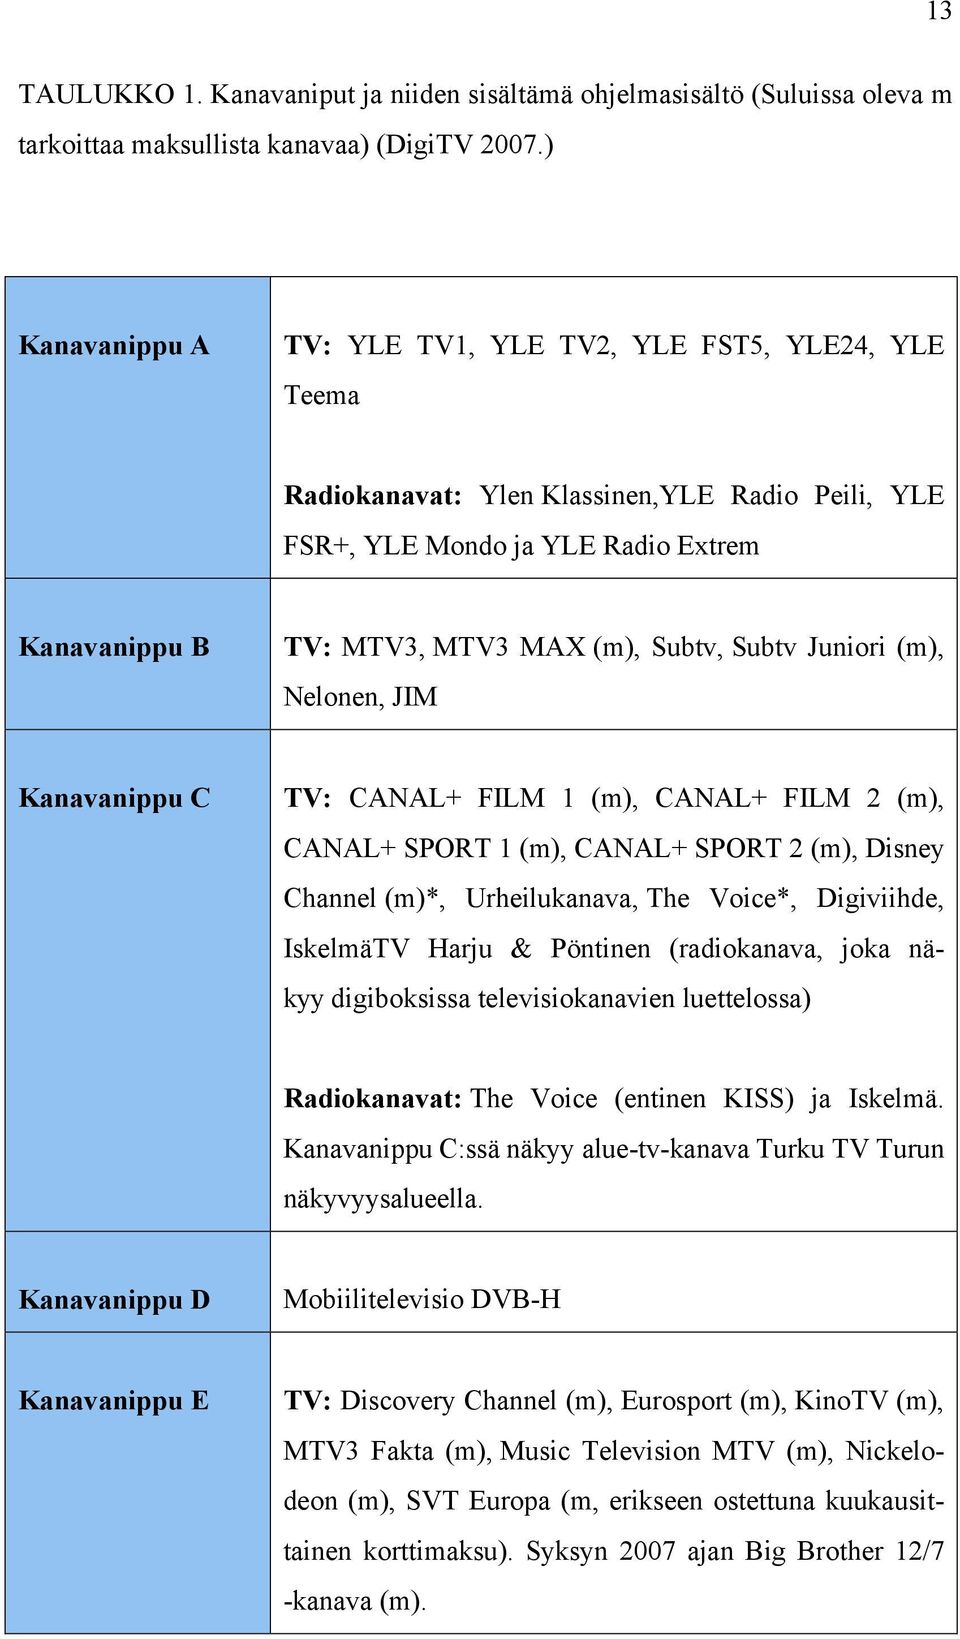 Subtv Juniori (m), Nelonen, JIM Kanavanippu C TV: CANAL+ FILM 1 (m), CANAL+ FILM 2 (m), CANAL+ SPORT 1 (m), CANAL+ SPORT 2 (m), Disney Channel (m)*, Urheilukanava, The Voice*, Digiviihde, IskelmäTV